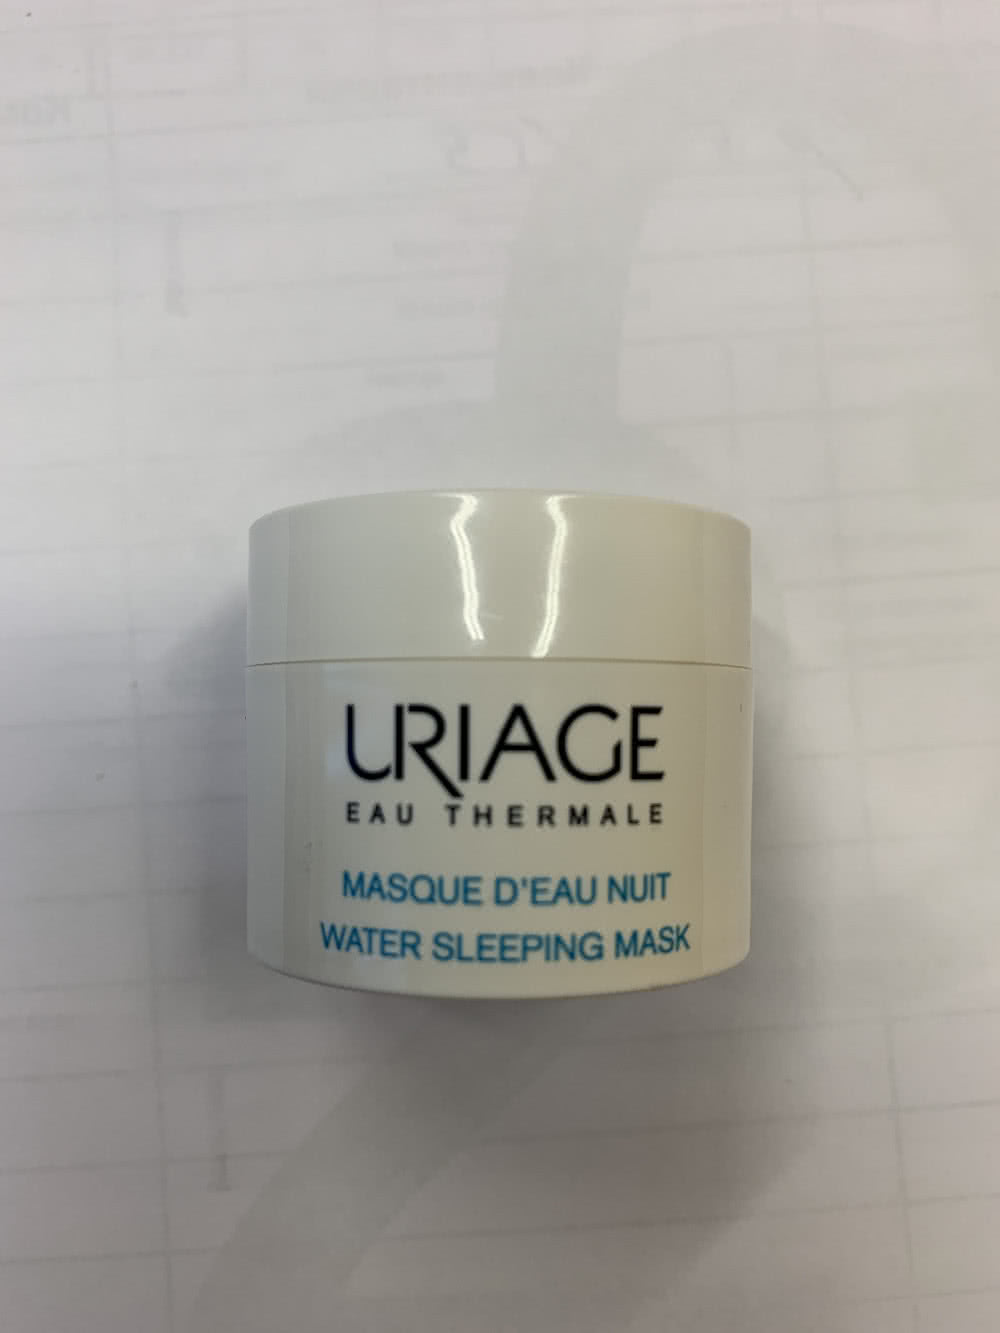 Uriage, Eau thermale Water Sleeping Mask, 15ml ЦЕНА СНИЖЕНА ПО СРОКУ